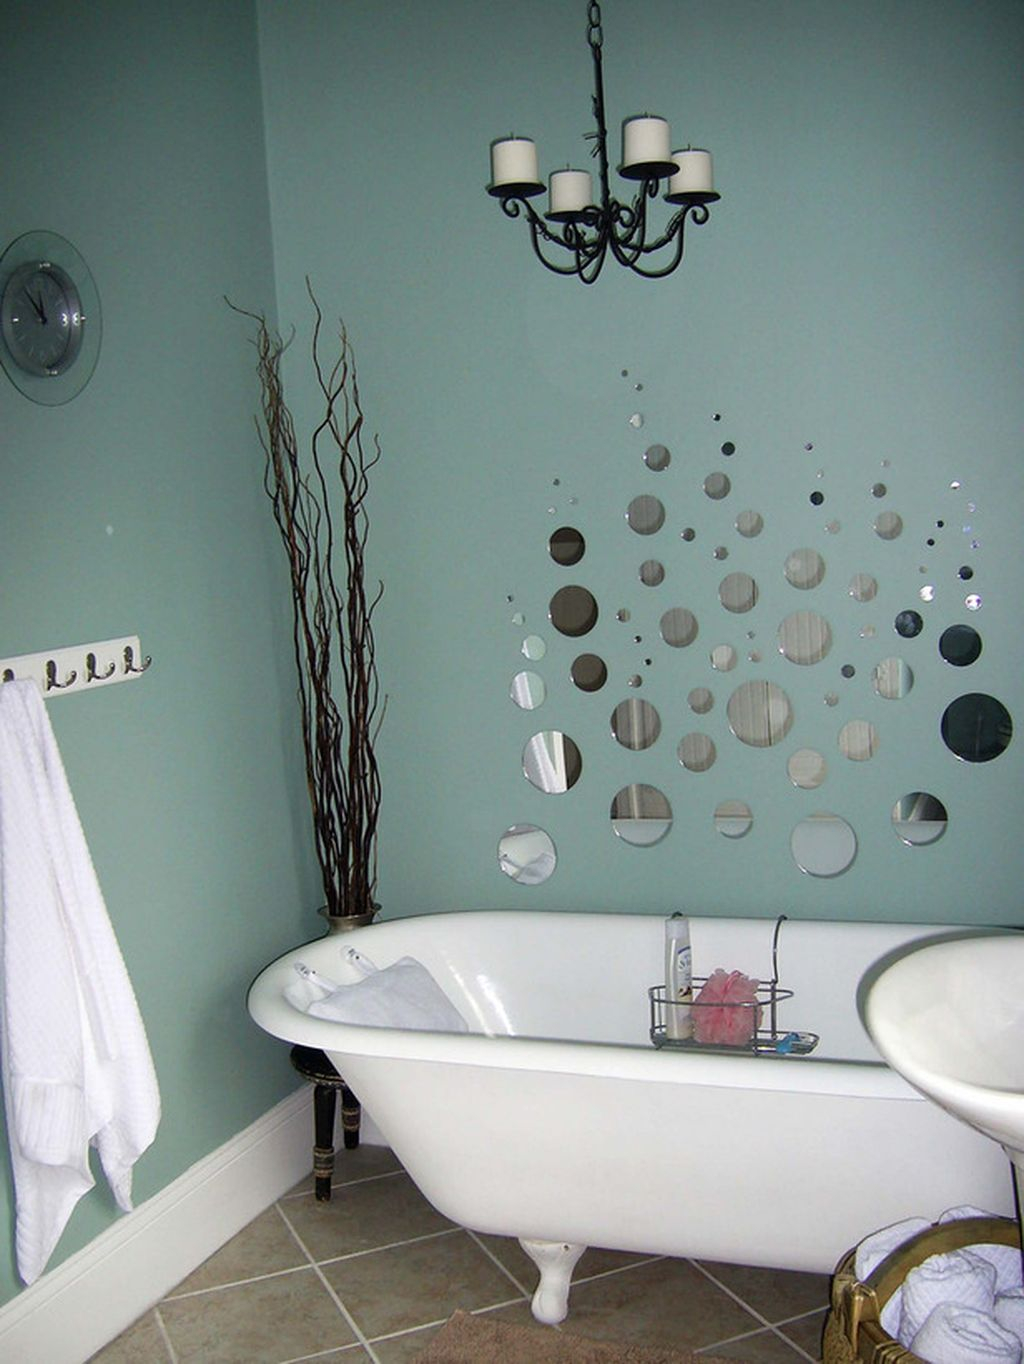 Romantic And Elegant Bathroom Design Ideas With Chandeliers 02